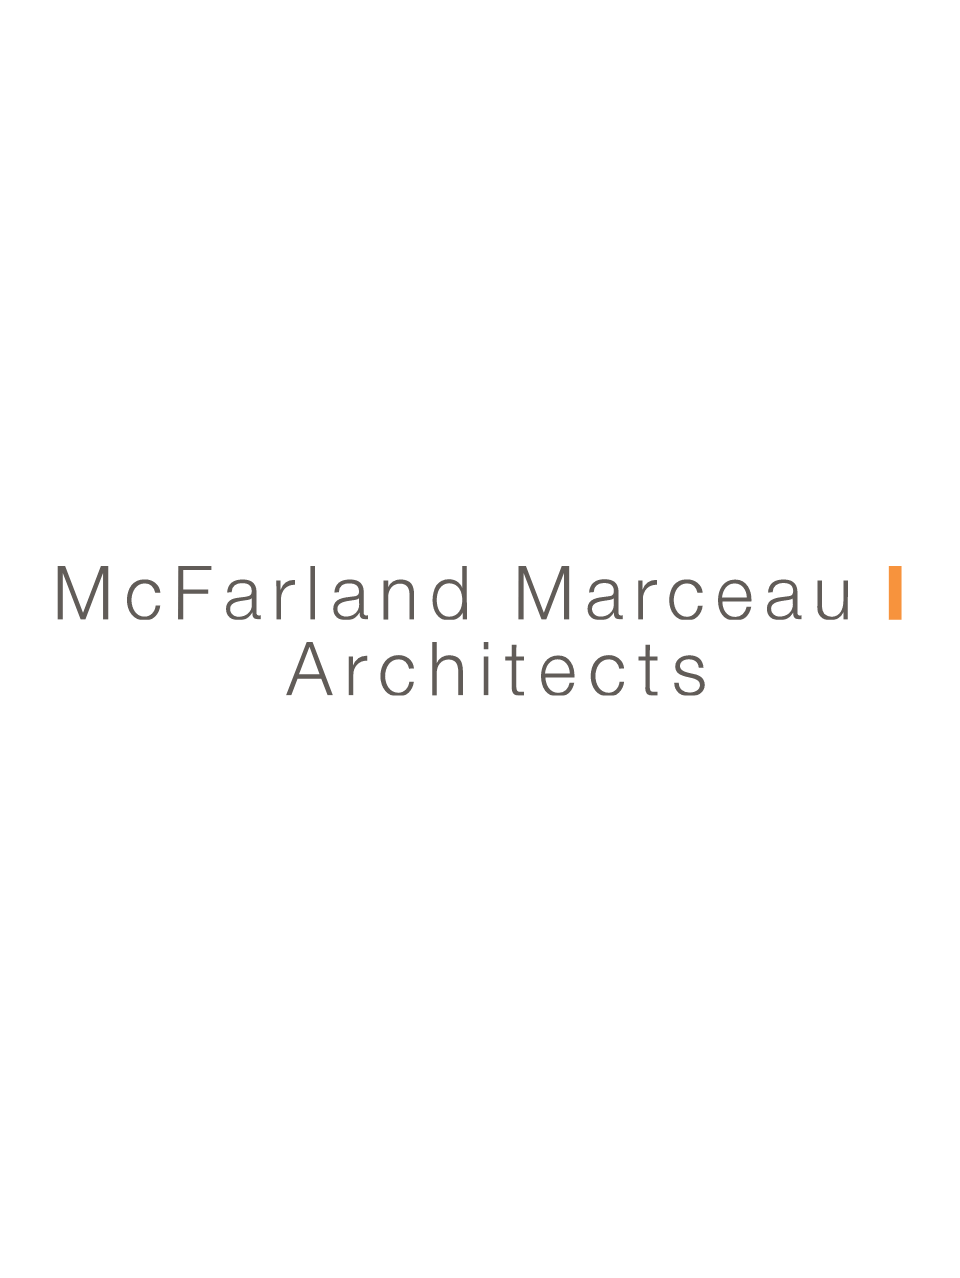 Spotlight on McFarland Marceau Architects